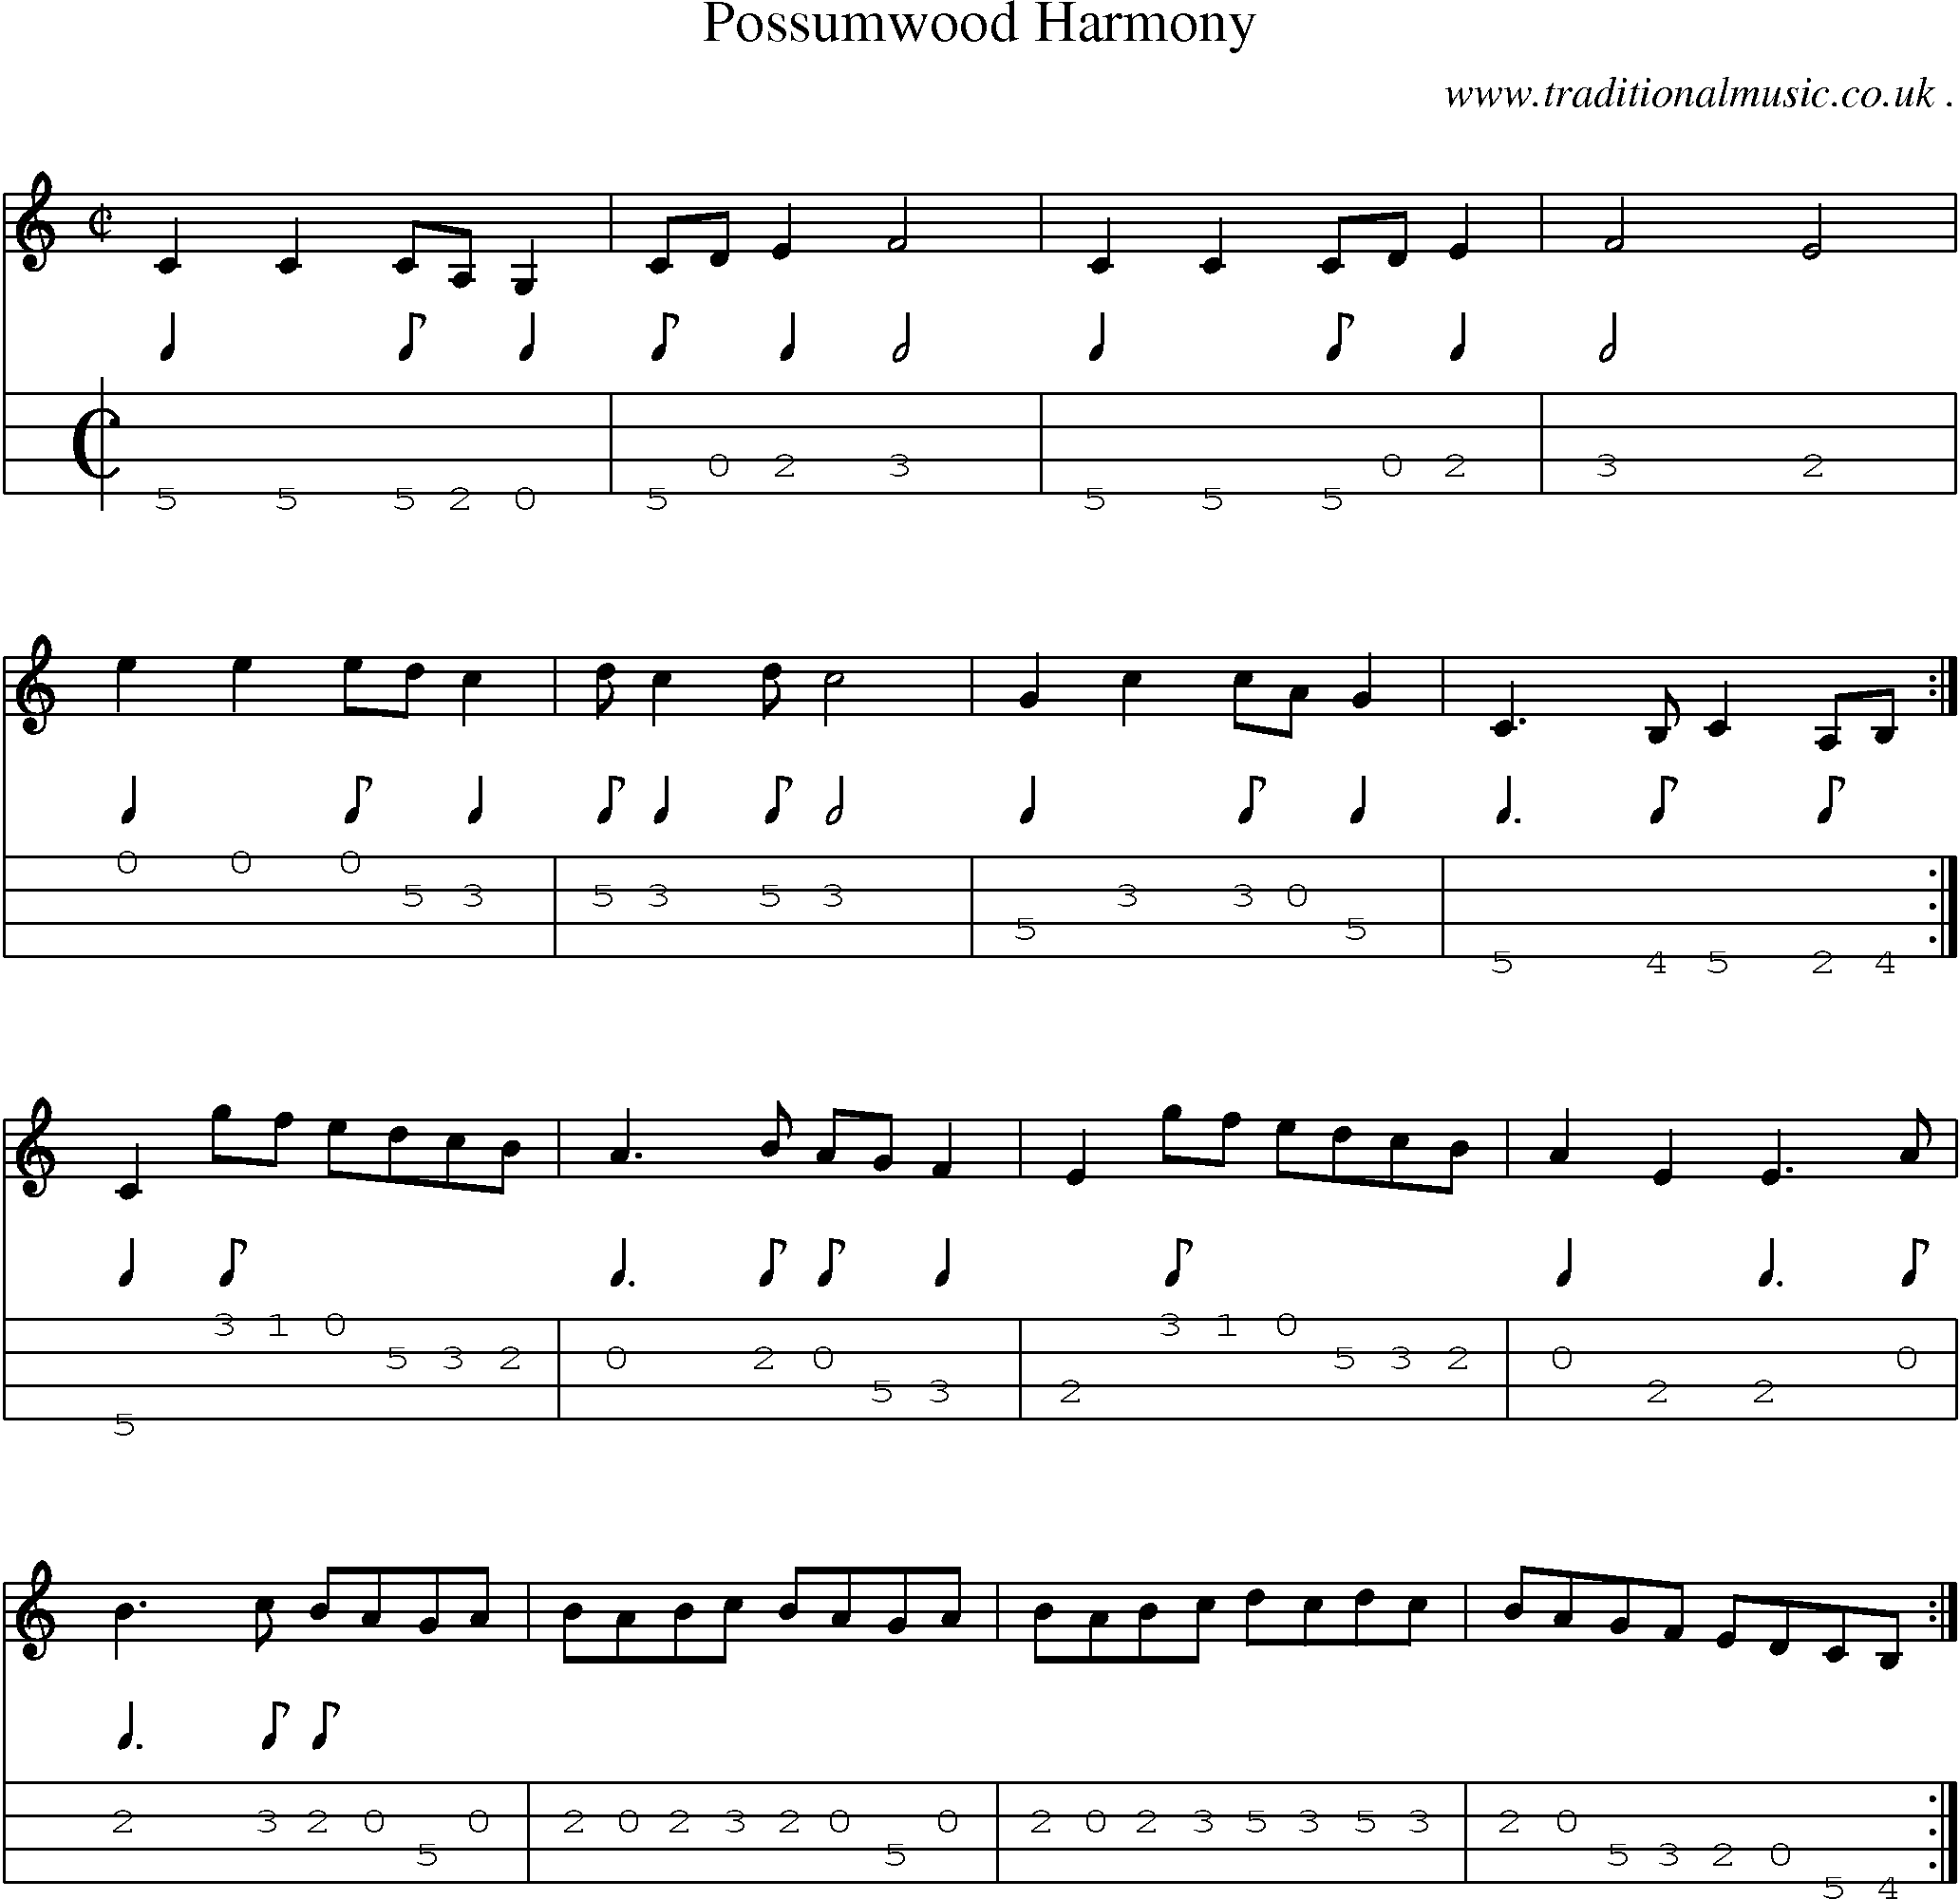 Music Score and Mandolin Tabs for Possumwood Harmony